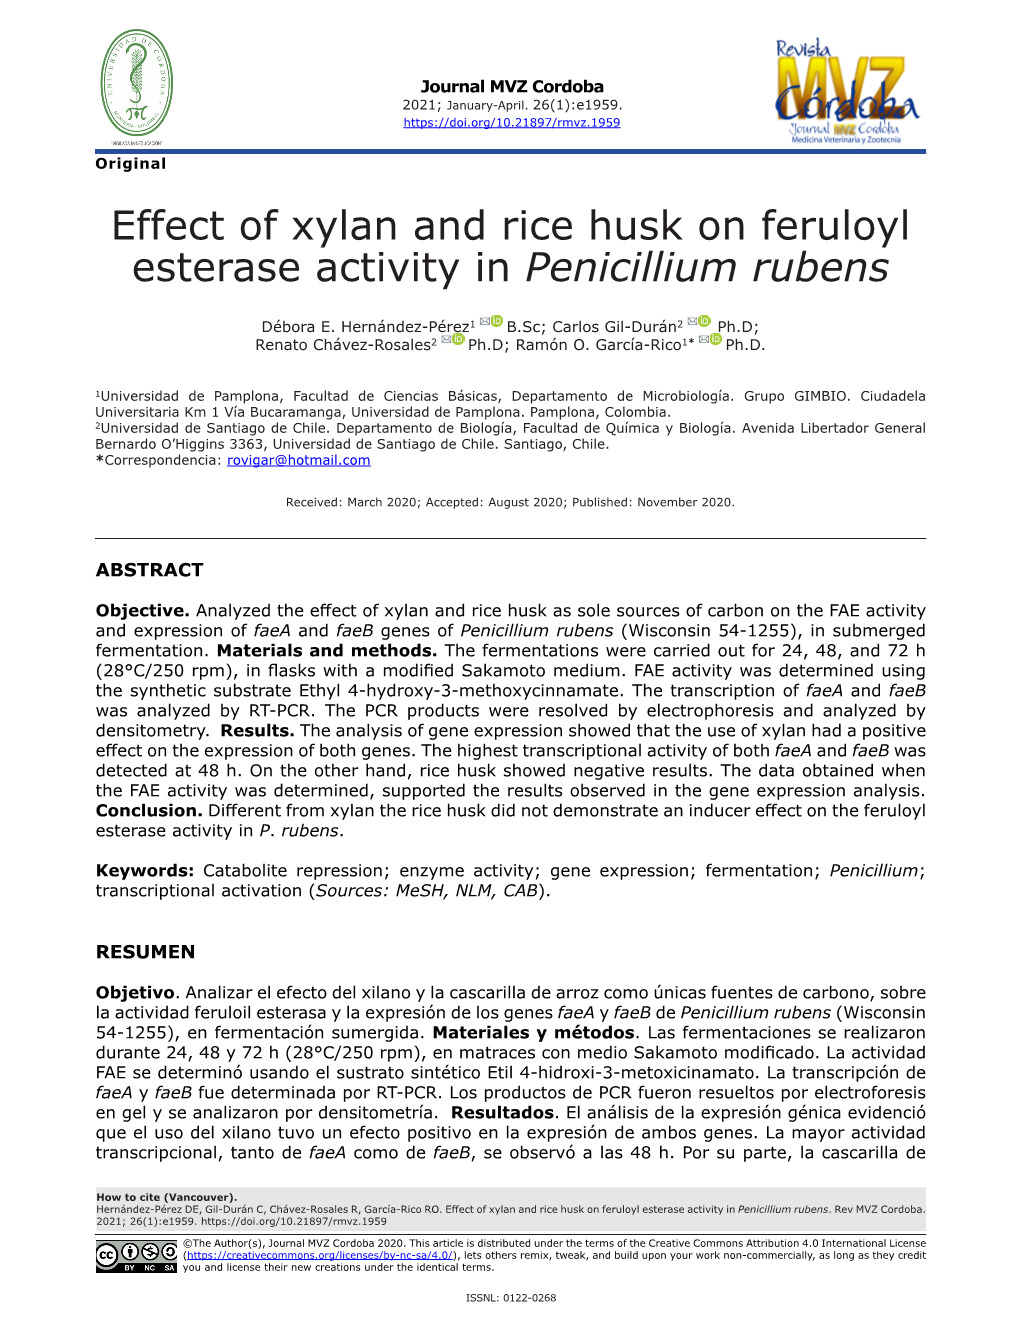 Effect of Xylan and Rice Husk on Feruloyl Esterase Activity in Penicillium Rubens